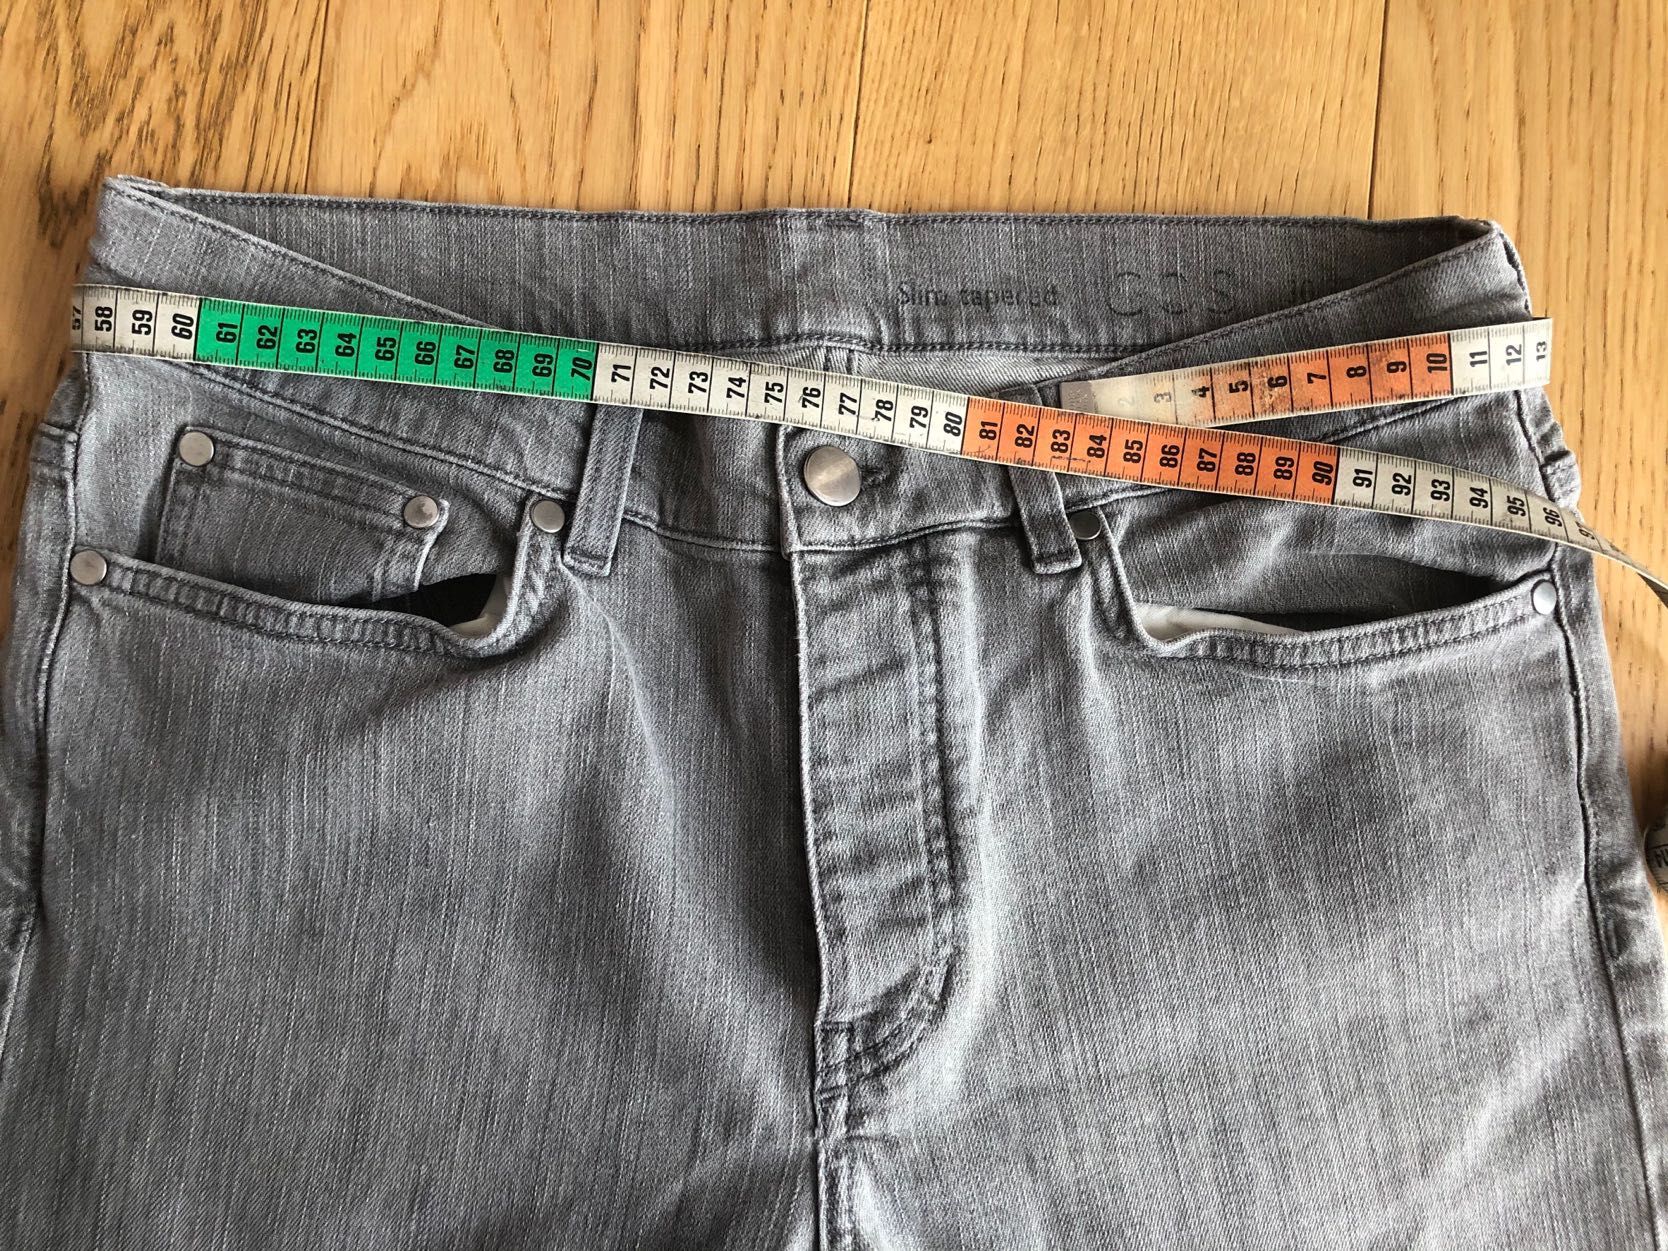 Szare jeansy (slim tapered), COS - rozmiar 30/32